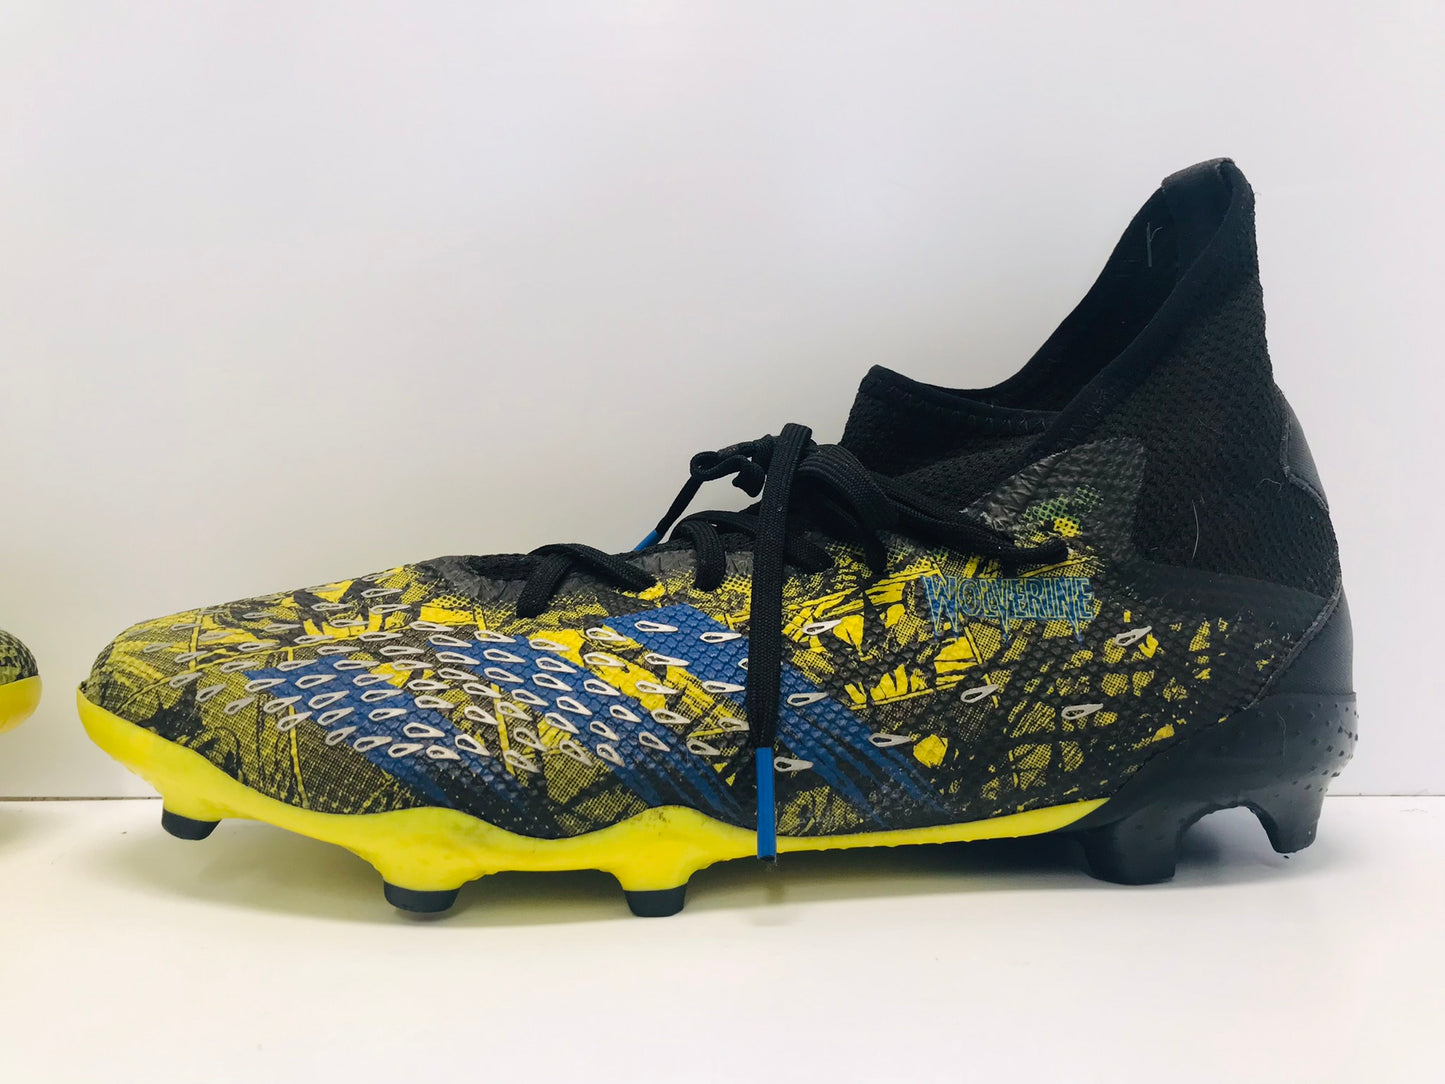 Soccer Shoes Cleats Men's Size 10 Adidas Preditor Xmen Marvel Freak .3 Wolverine Slipper Foot Blue Black Yellow